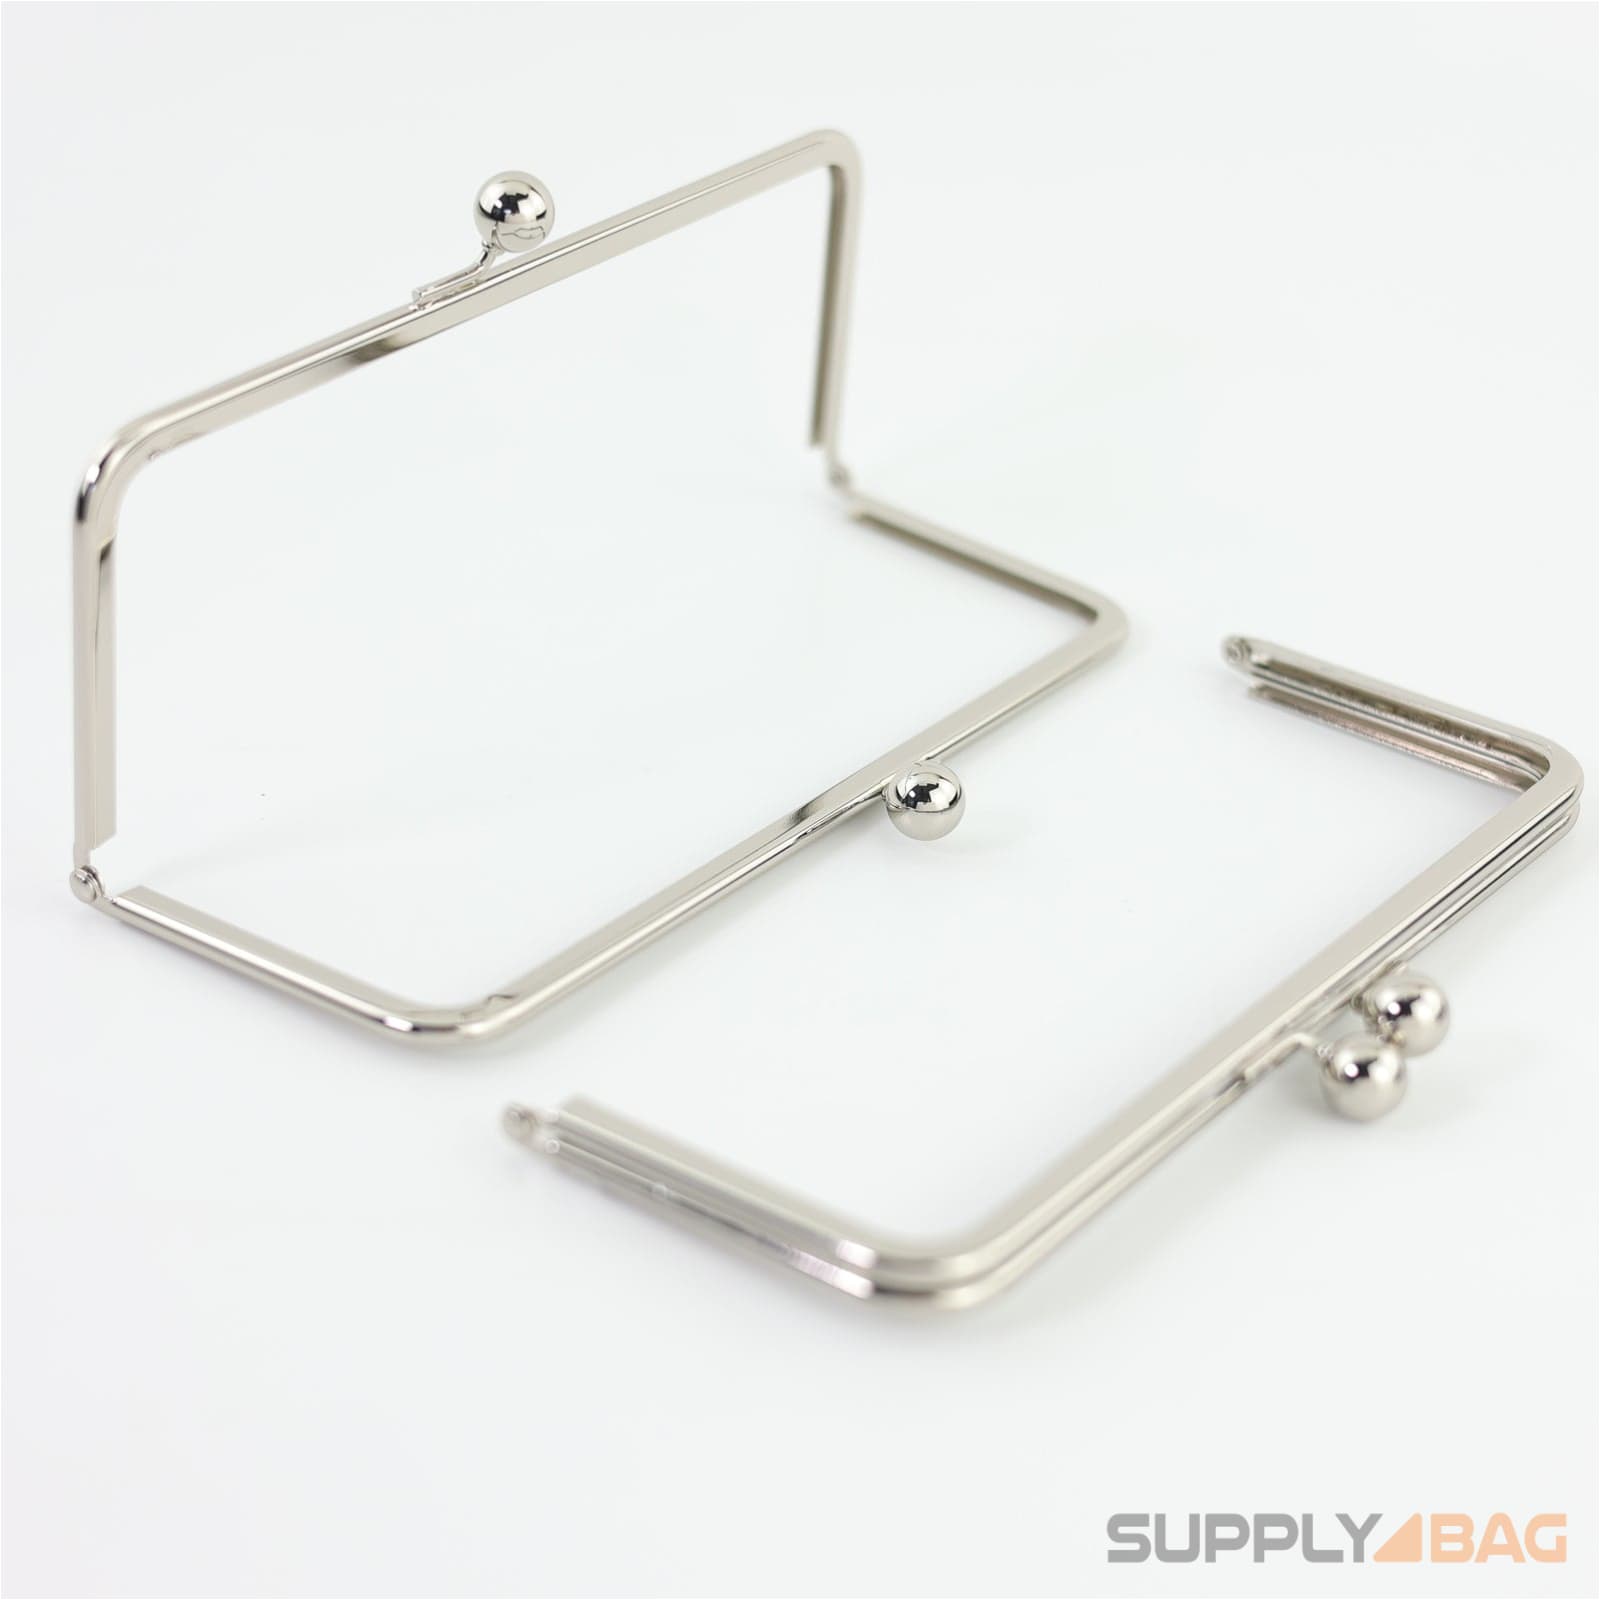 7 3/4 x 3 inch - Kisslock Clasp - Silver Metal Purse Frame